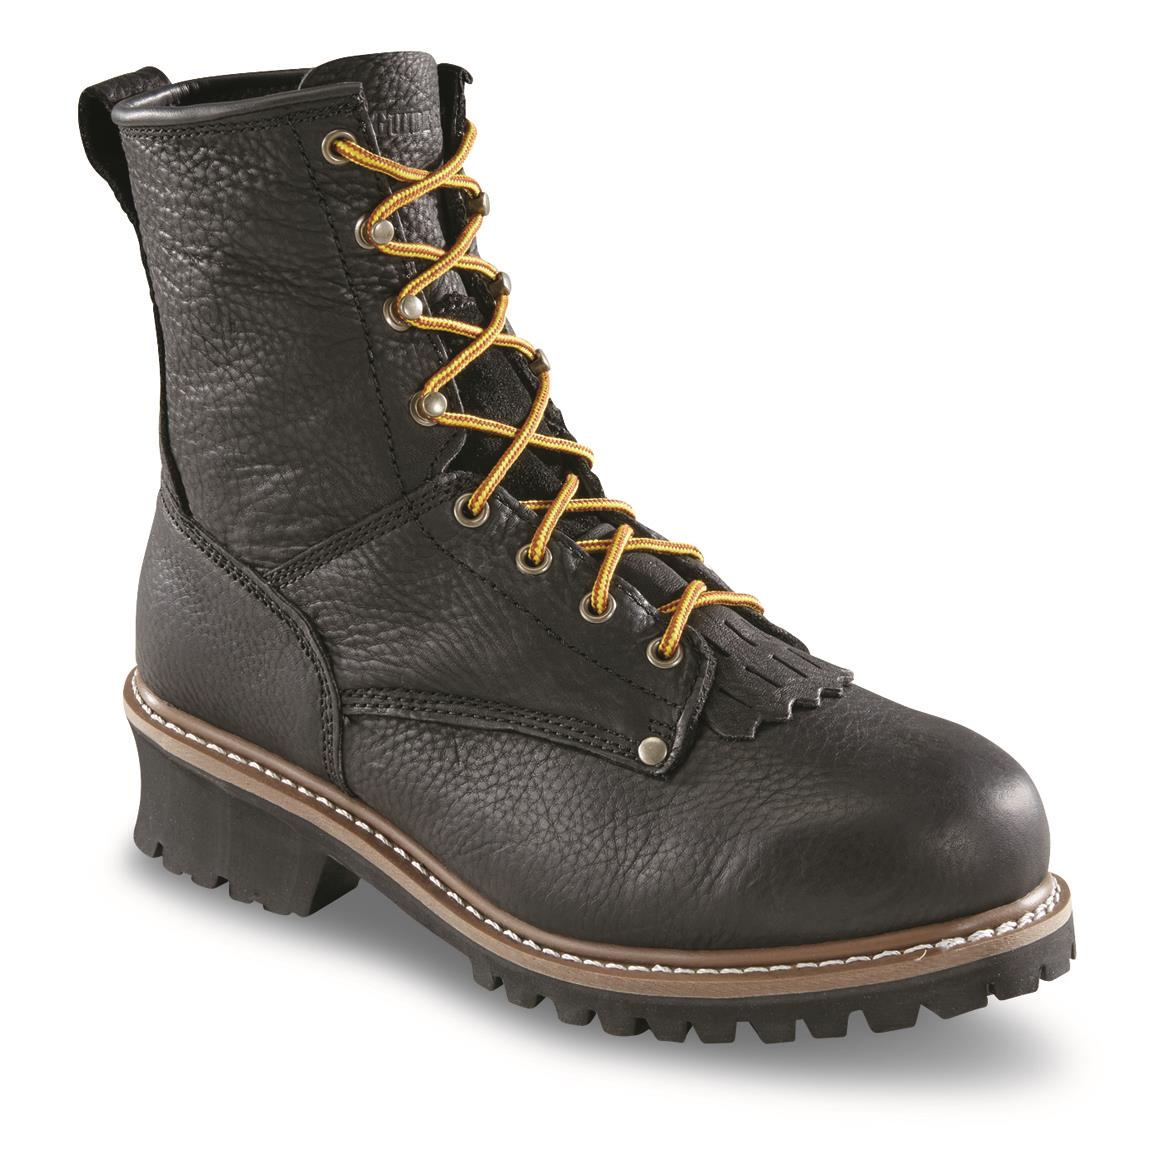 Guide Gear Men's Sawtooth Steel Toe Logger Boots, Black